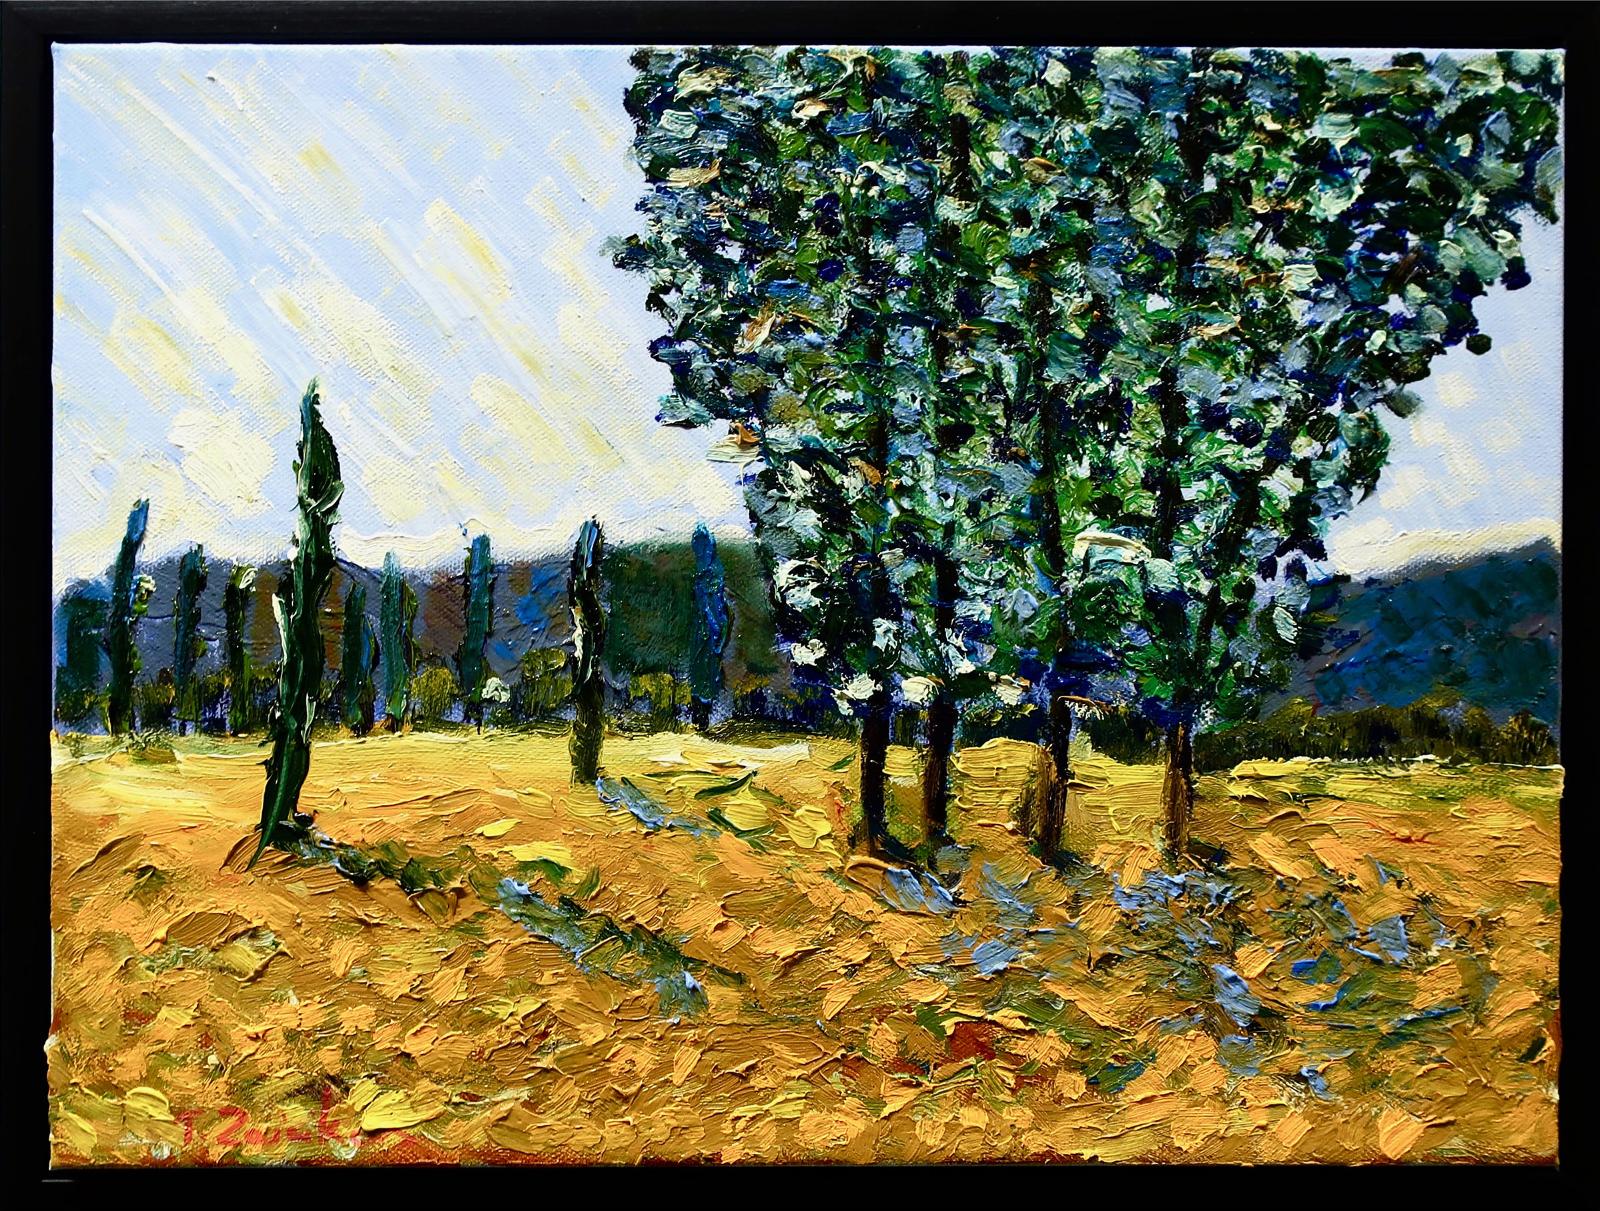 Tadas Zaicikas (1974) - Landscape With Trees